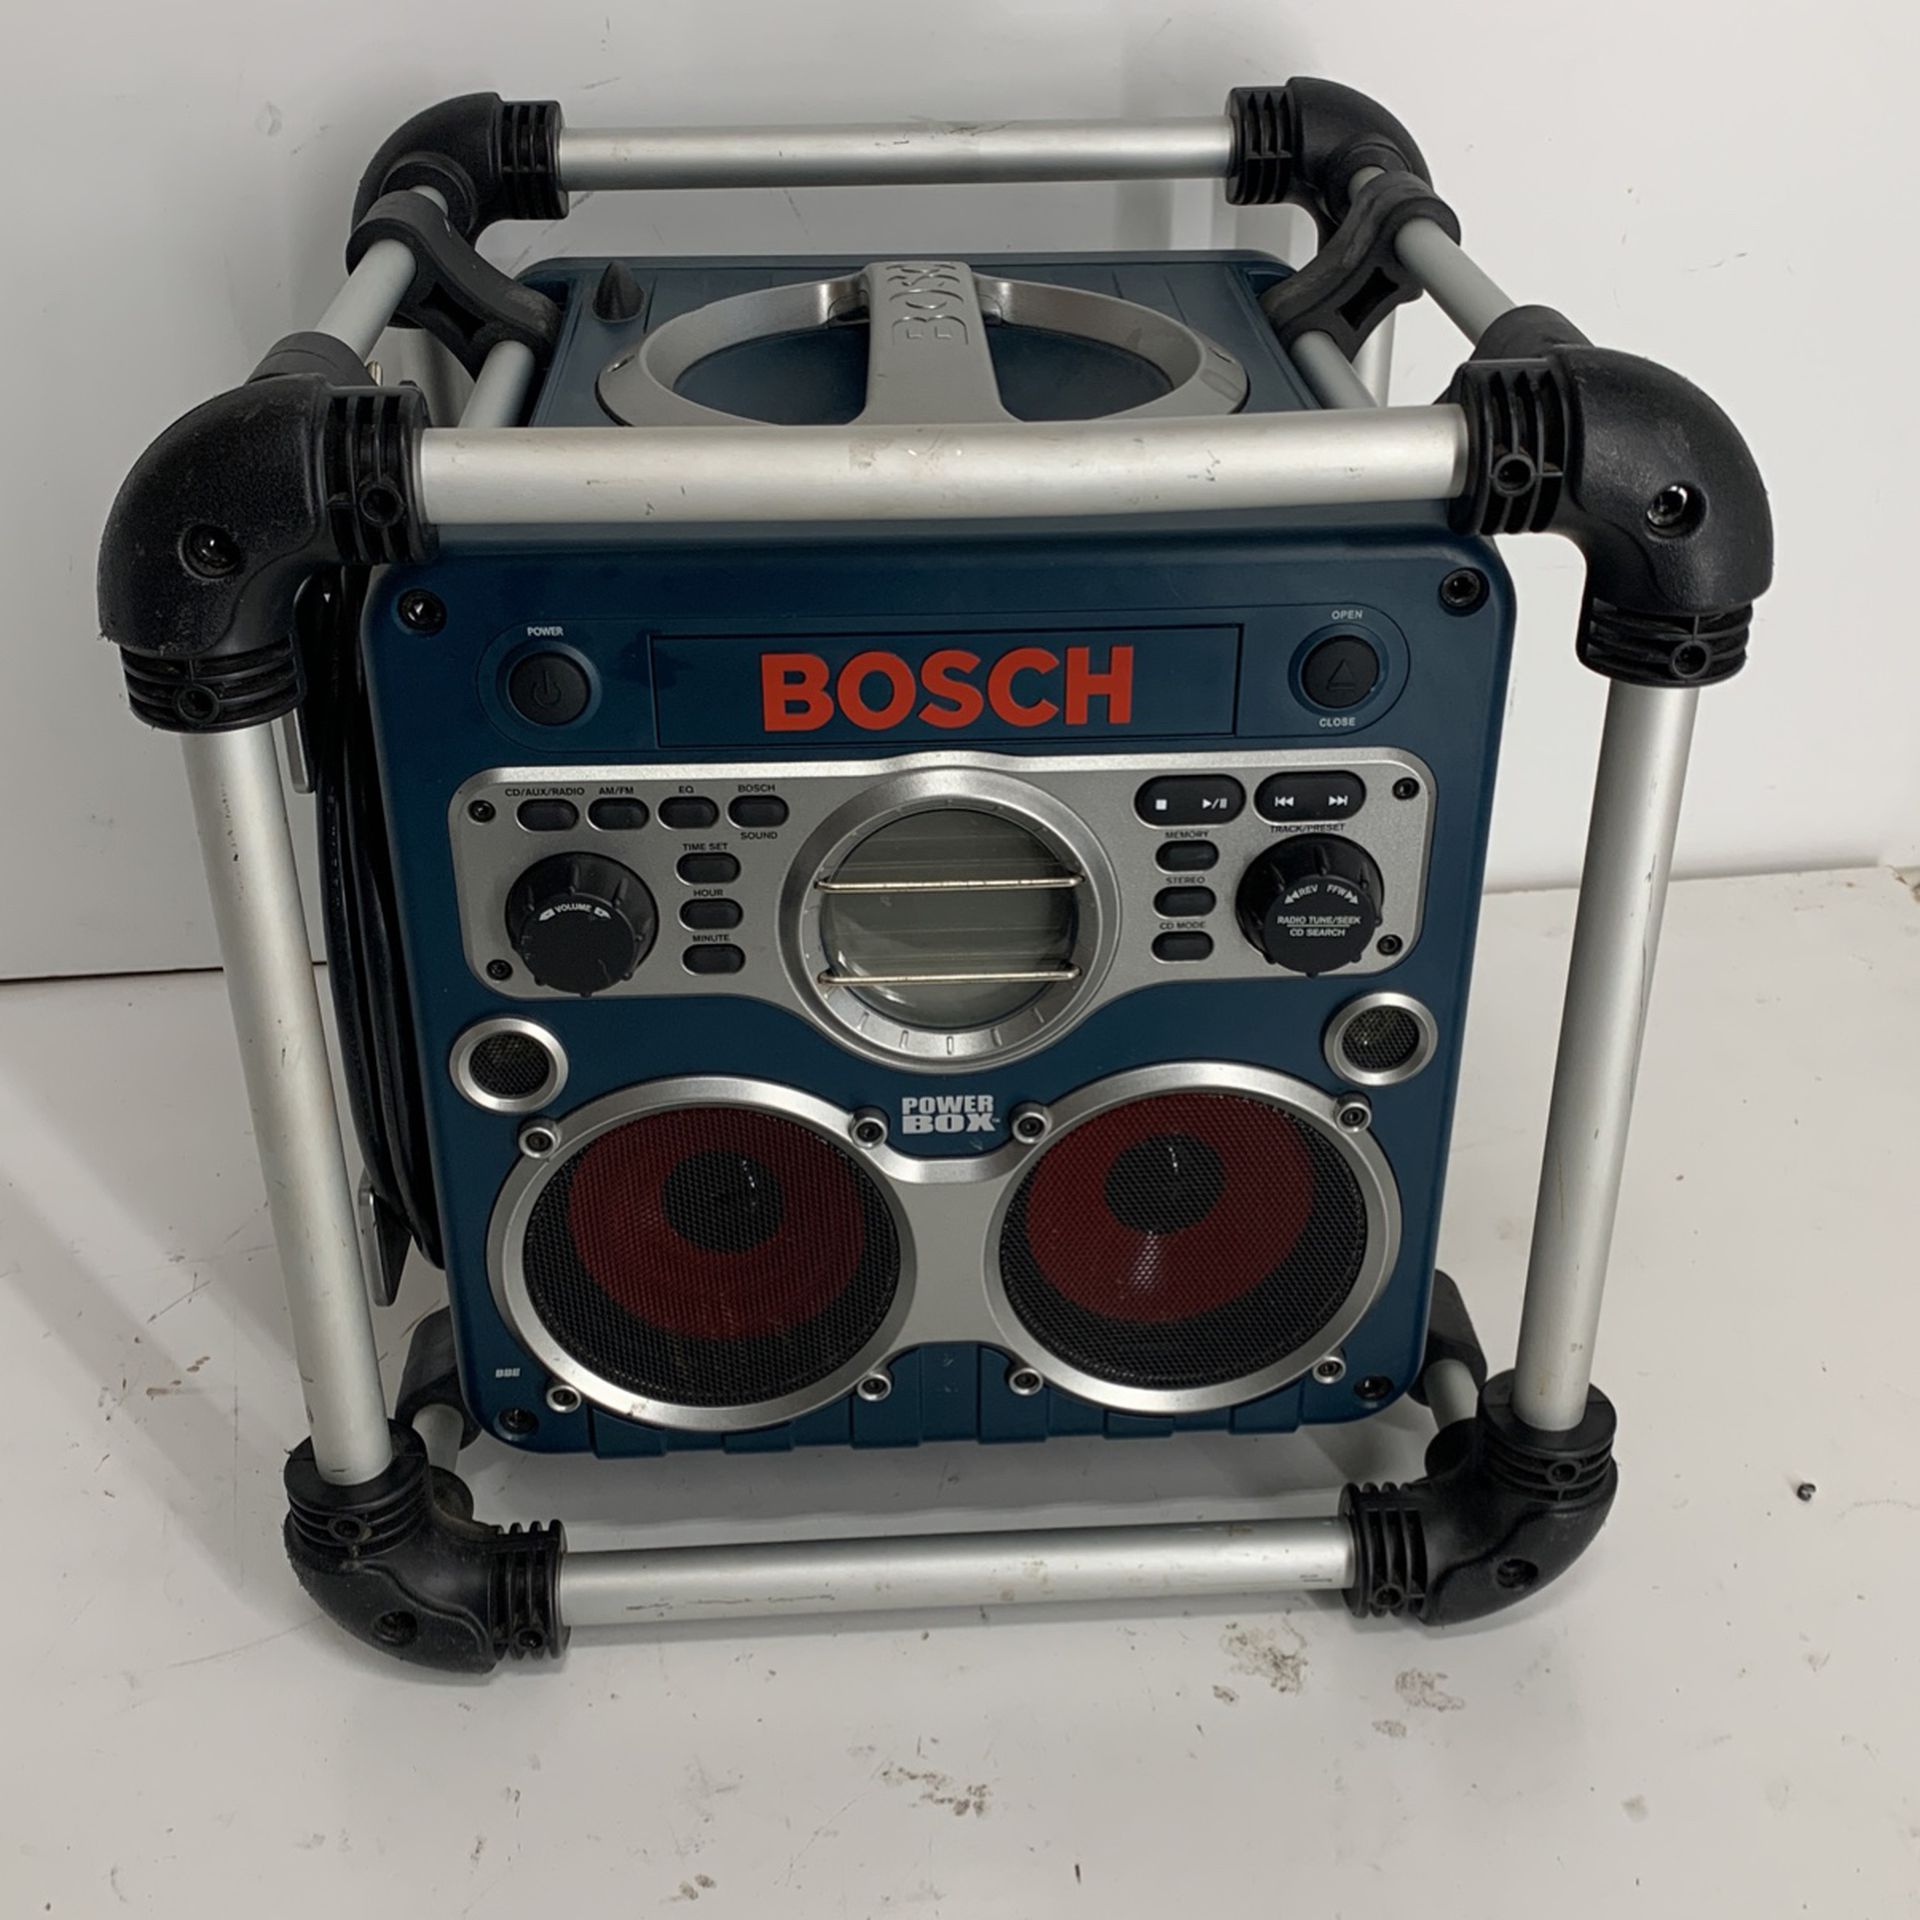 Bosch Power Box JobSite Radio 134101